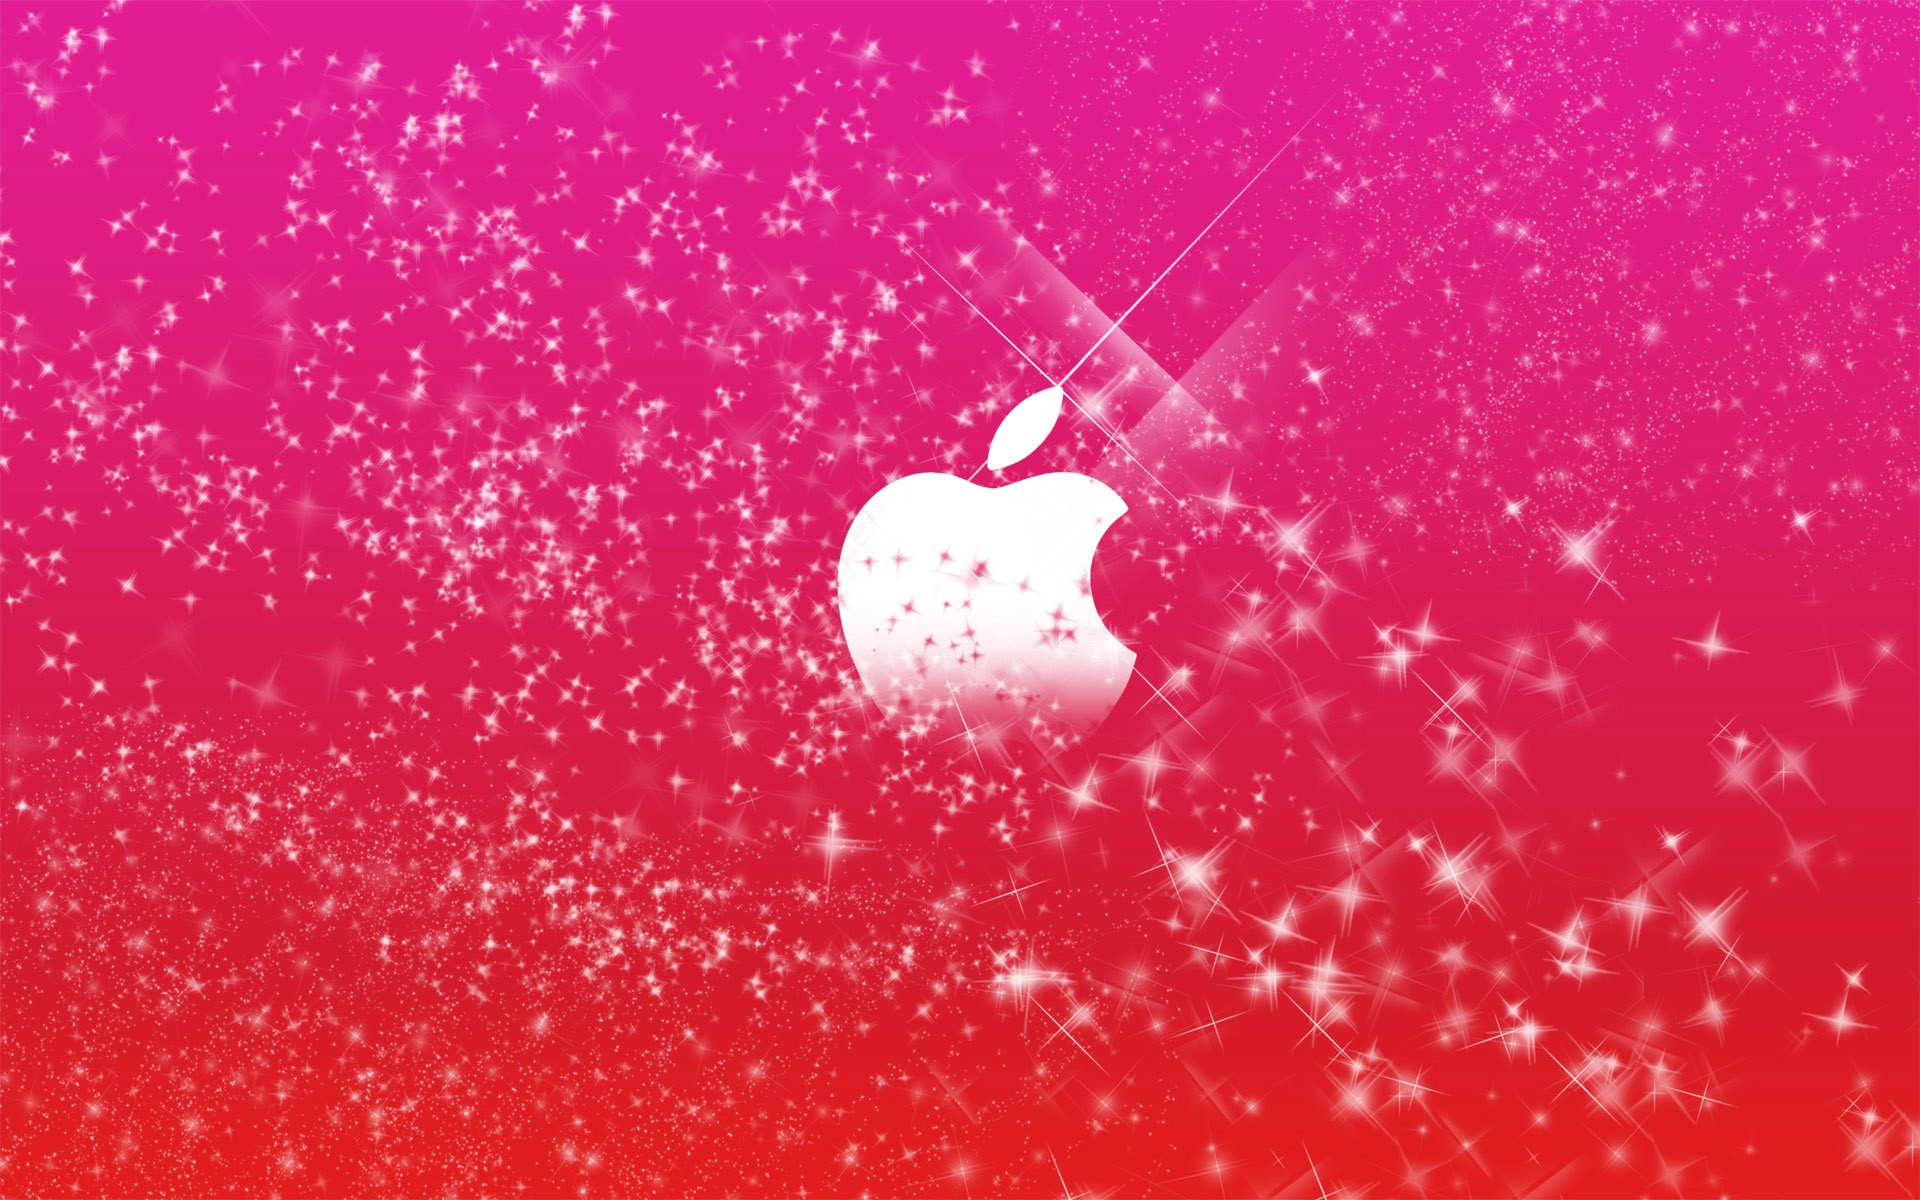 Sparkly Apple Wallpaper